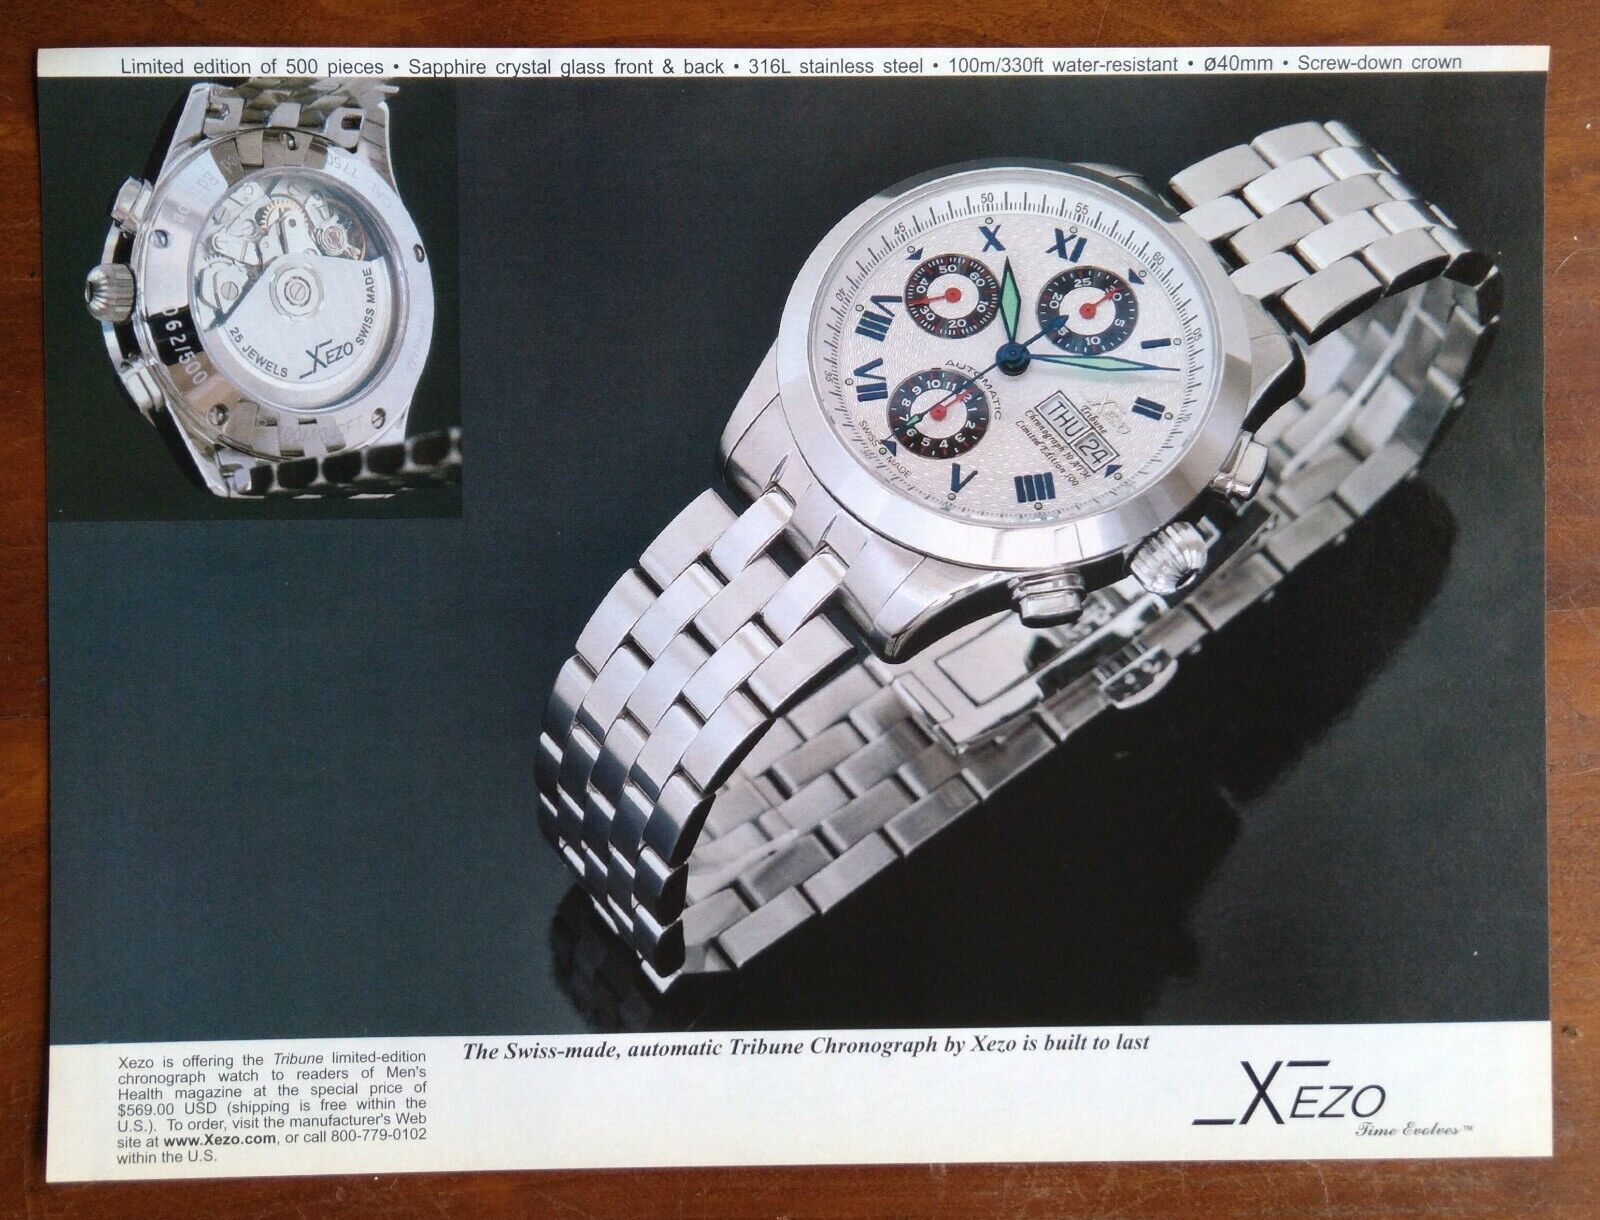 2007 Xezo Tribune Chronograph Limited Edition Watch Art Photo Vintage Print Ad 